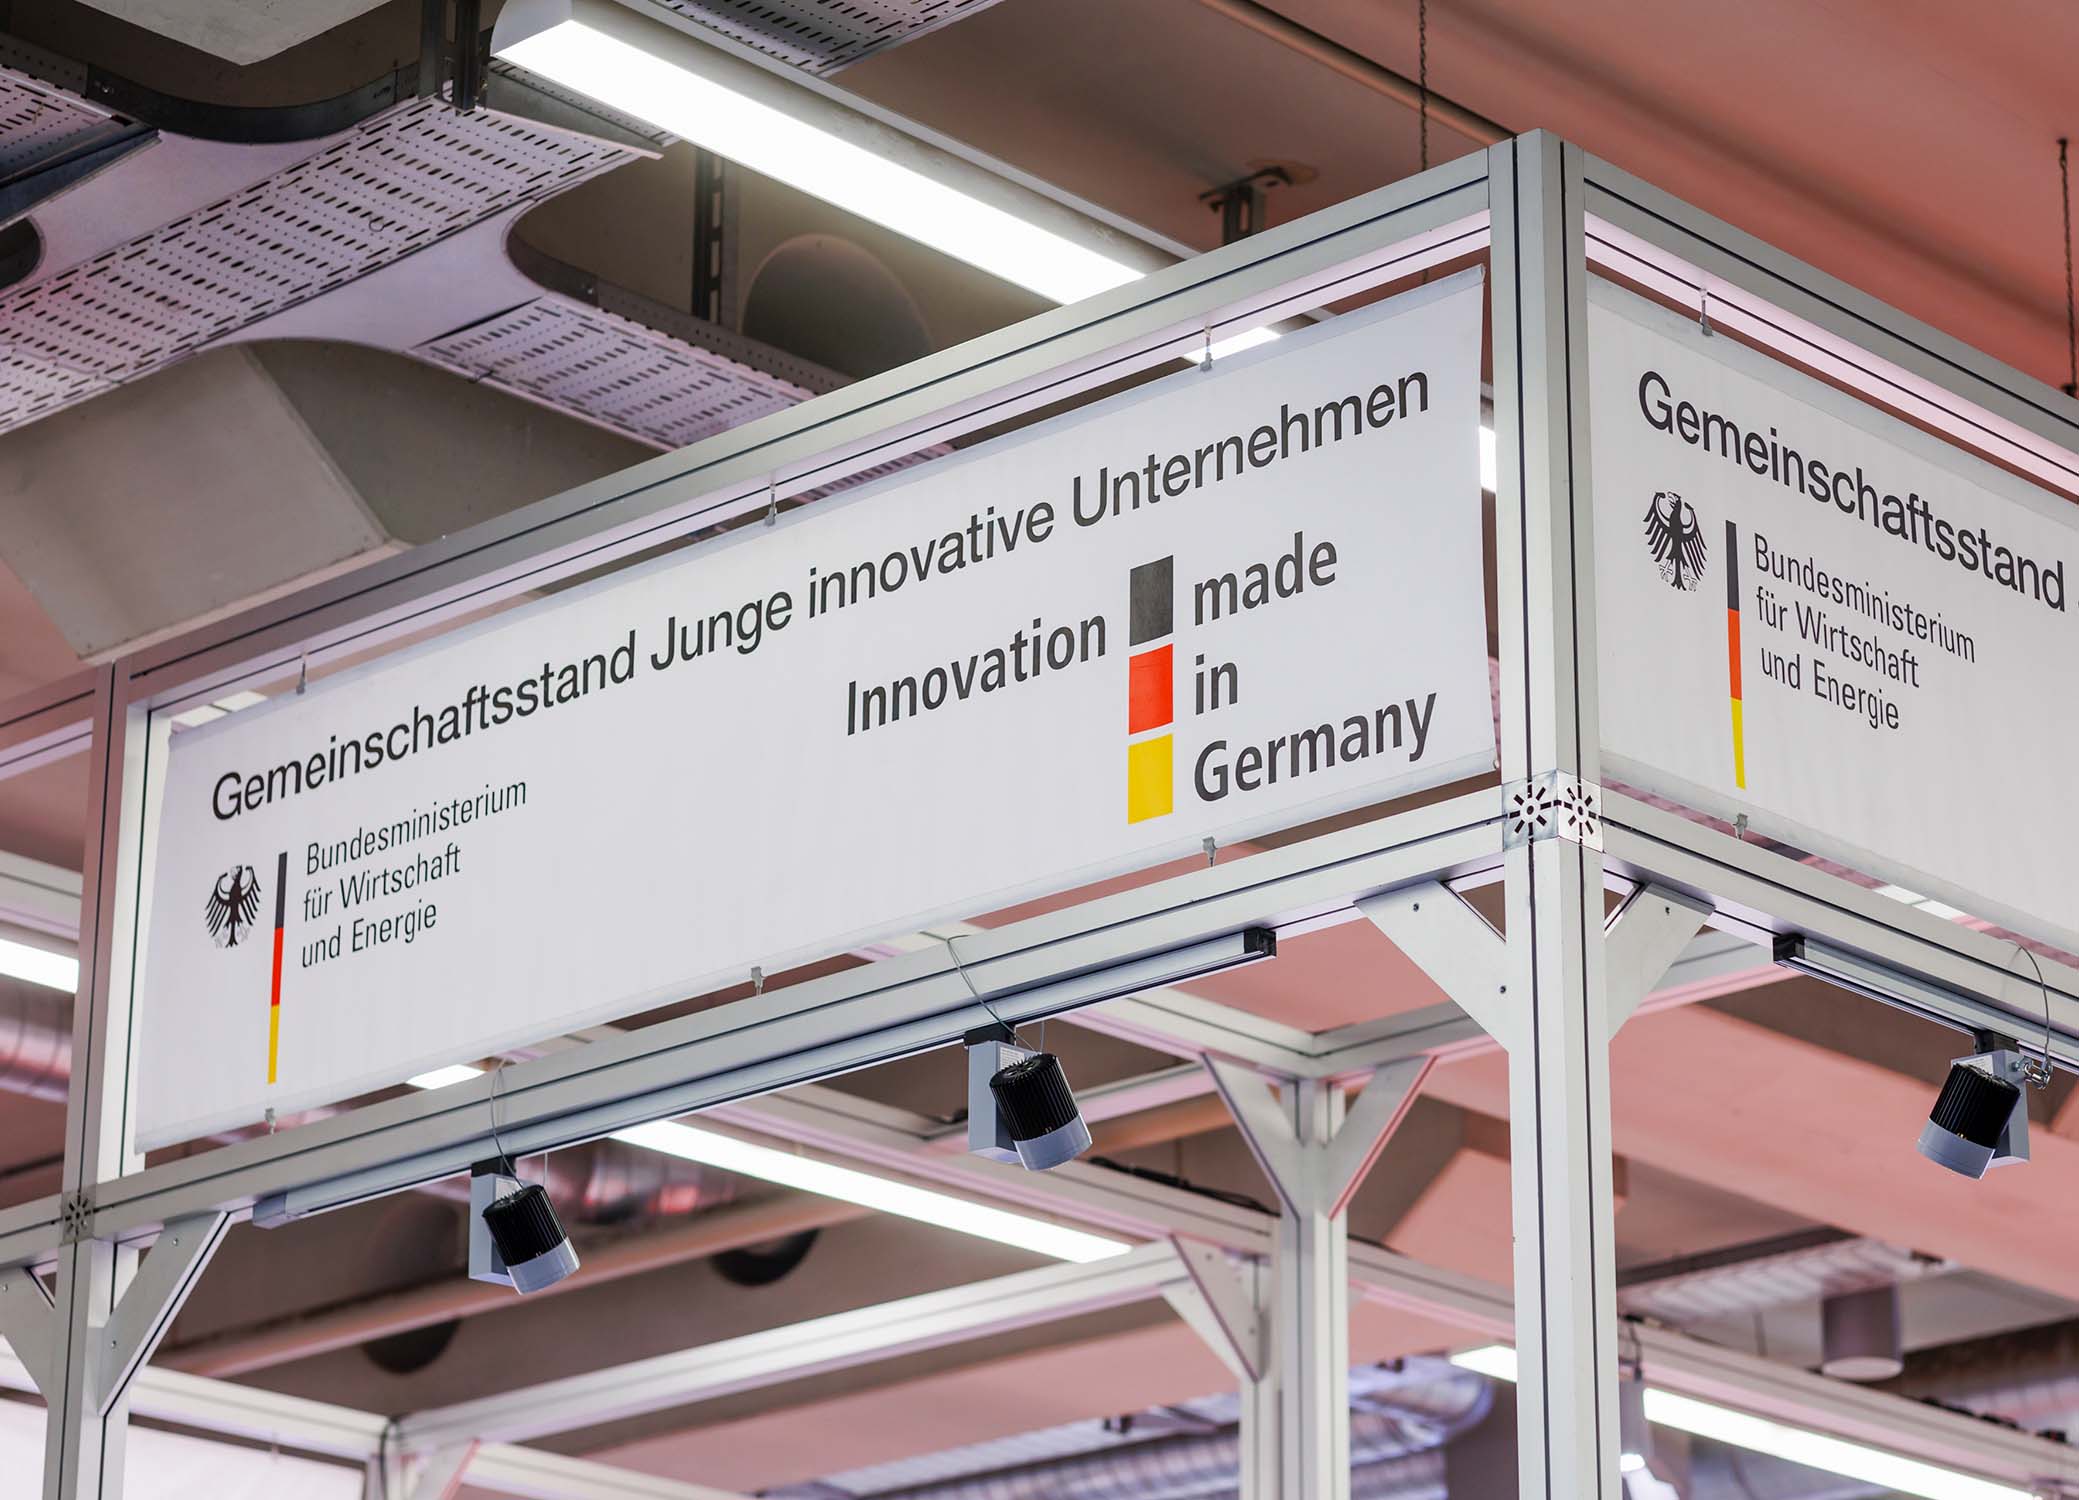 Geförderter Gemeinschaftsstand „Innovation made in Germany“